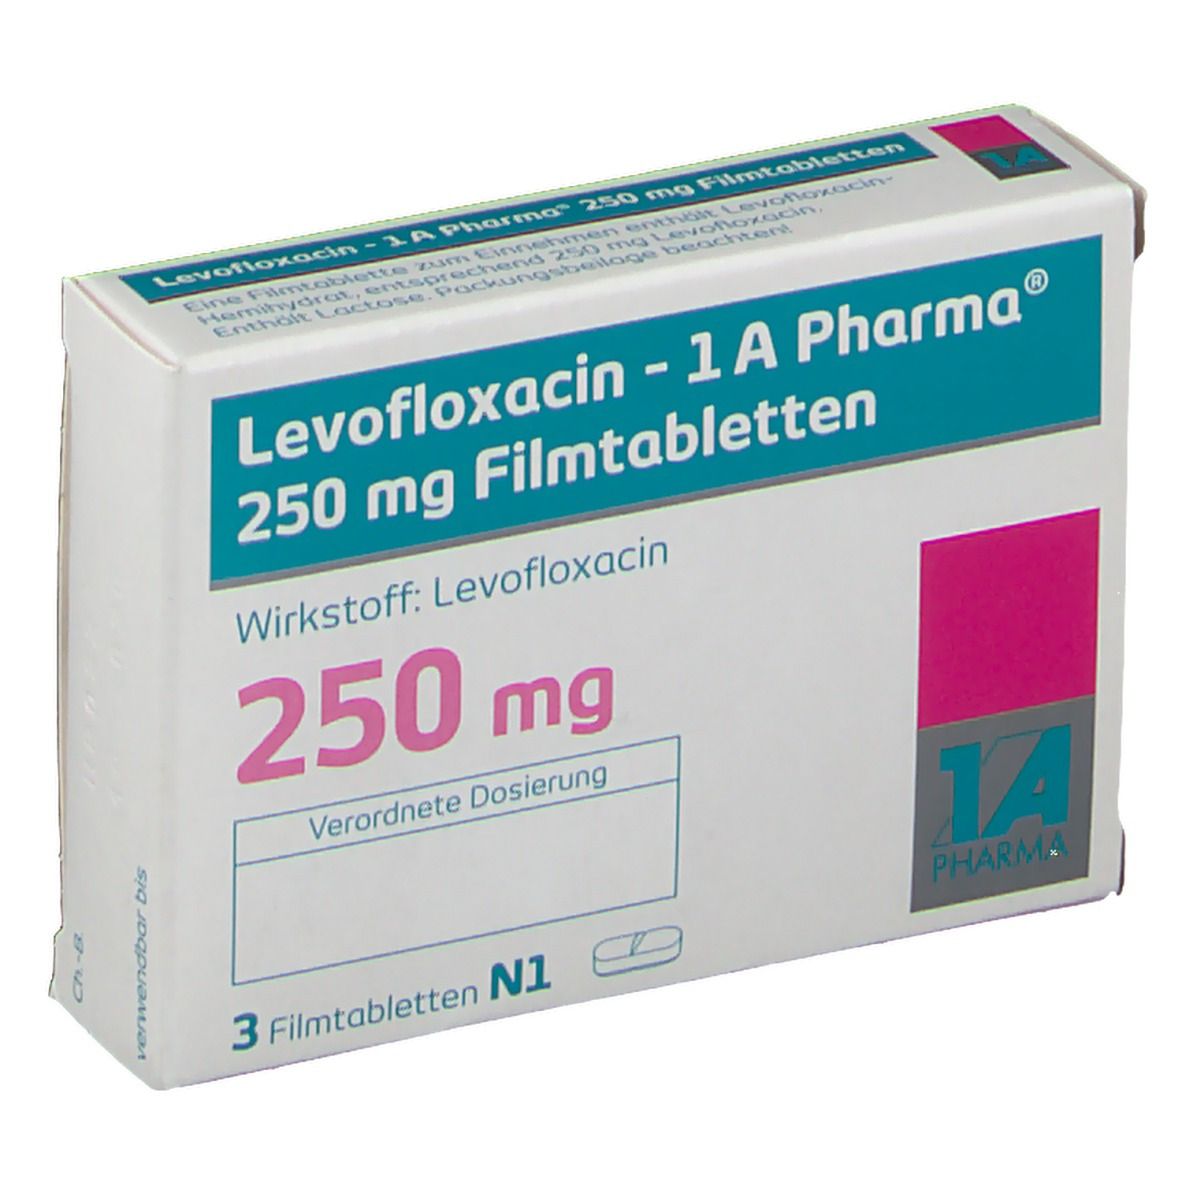 Levofloxacin - 1 A Pharma® 250 mg